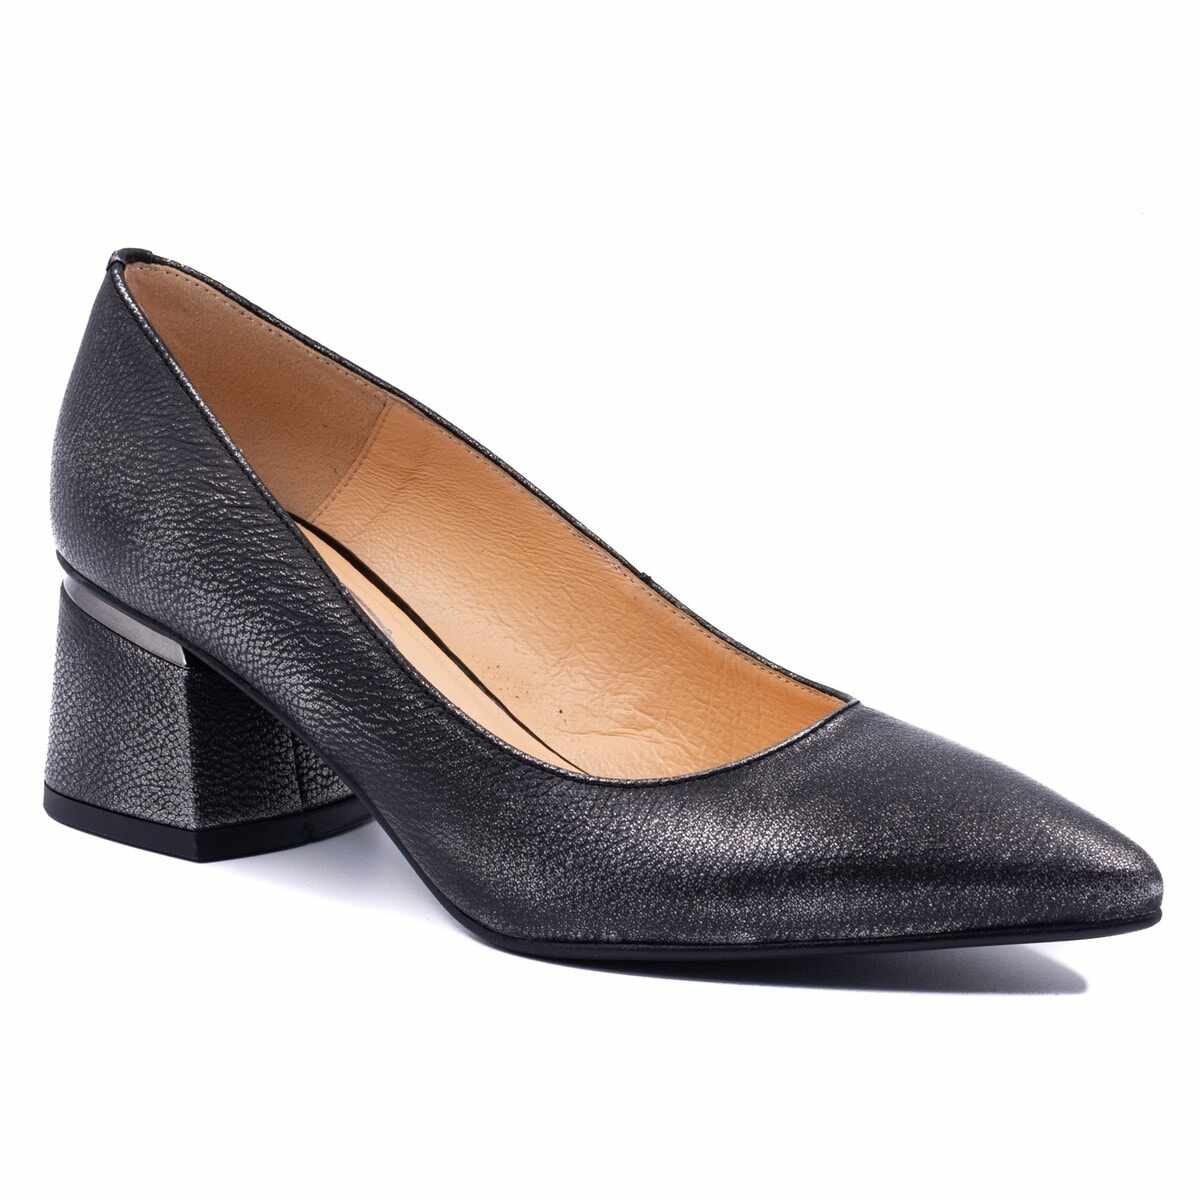 King Lear Attach to fatigue Pantofi casual dama, Beatrixx, din piele naturala vintage, culoare negru,  cod 1451-01 - 2 produse